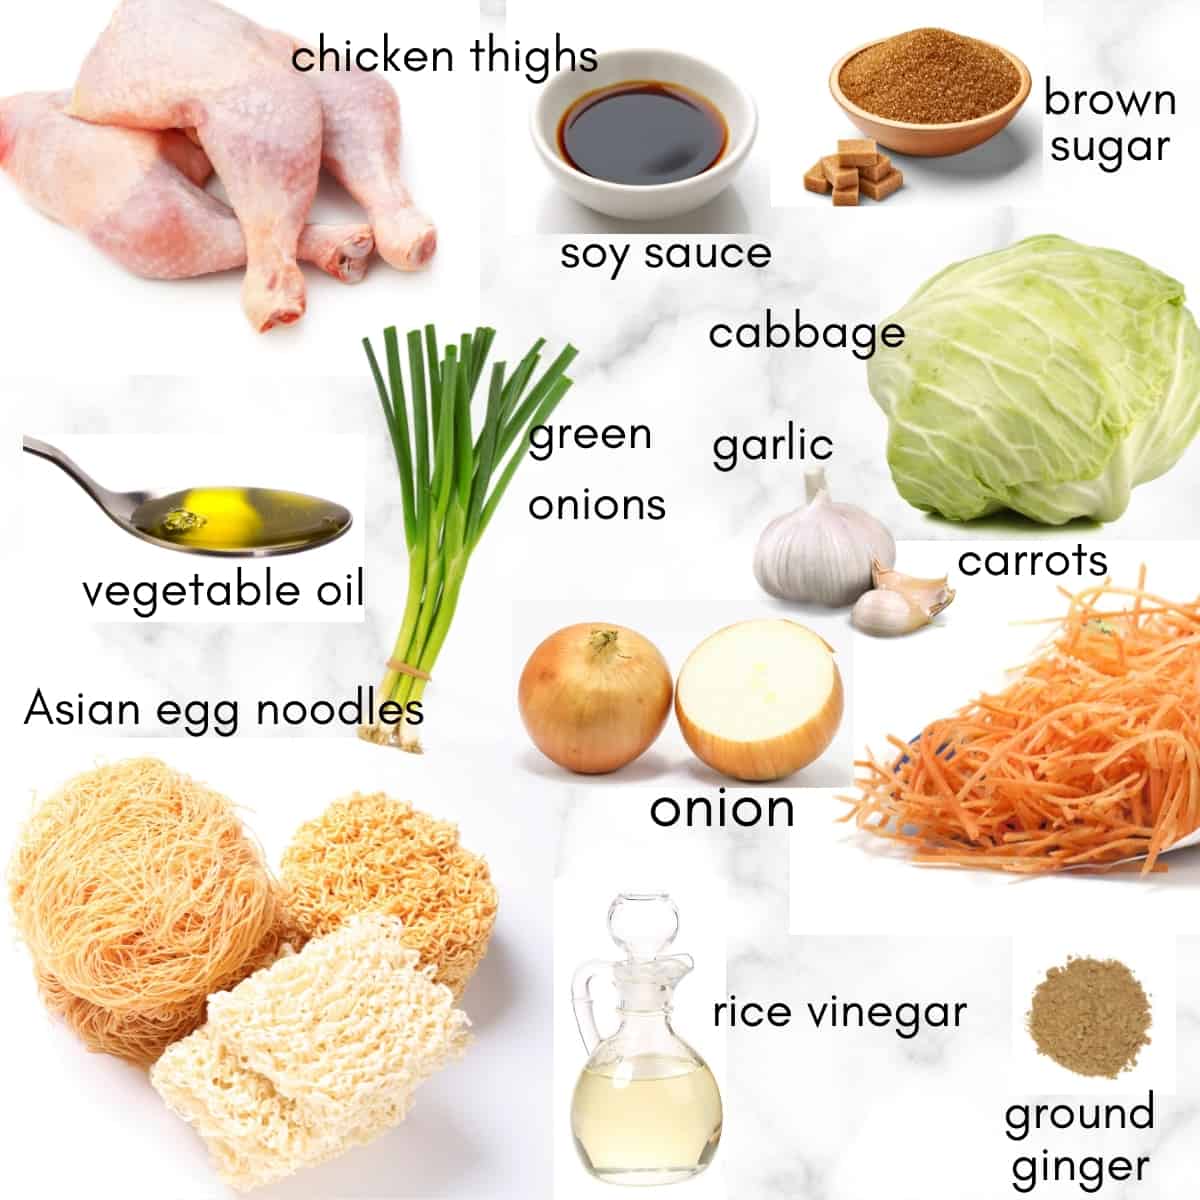 Labeled ingredients needed to make ramen stir fry noodles.